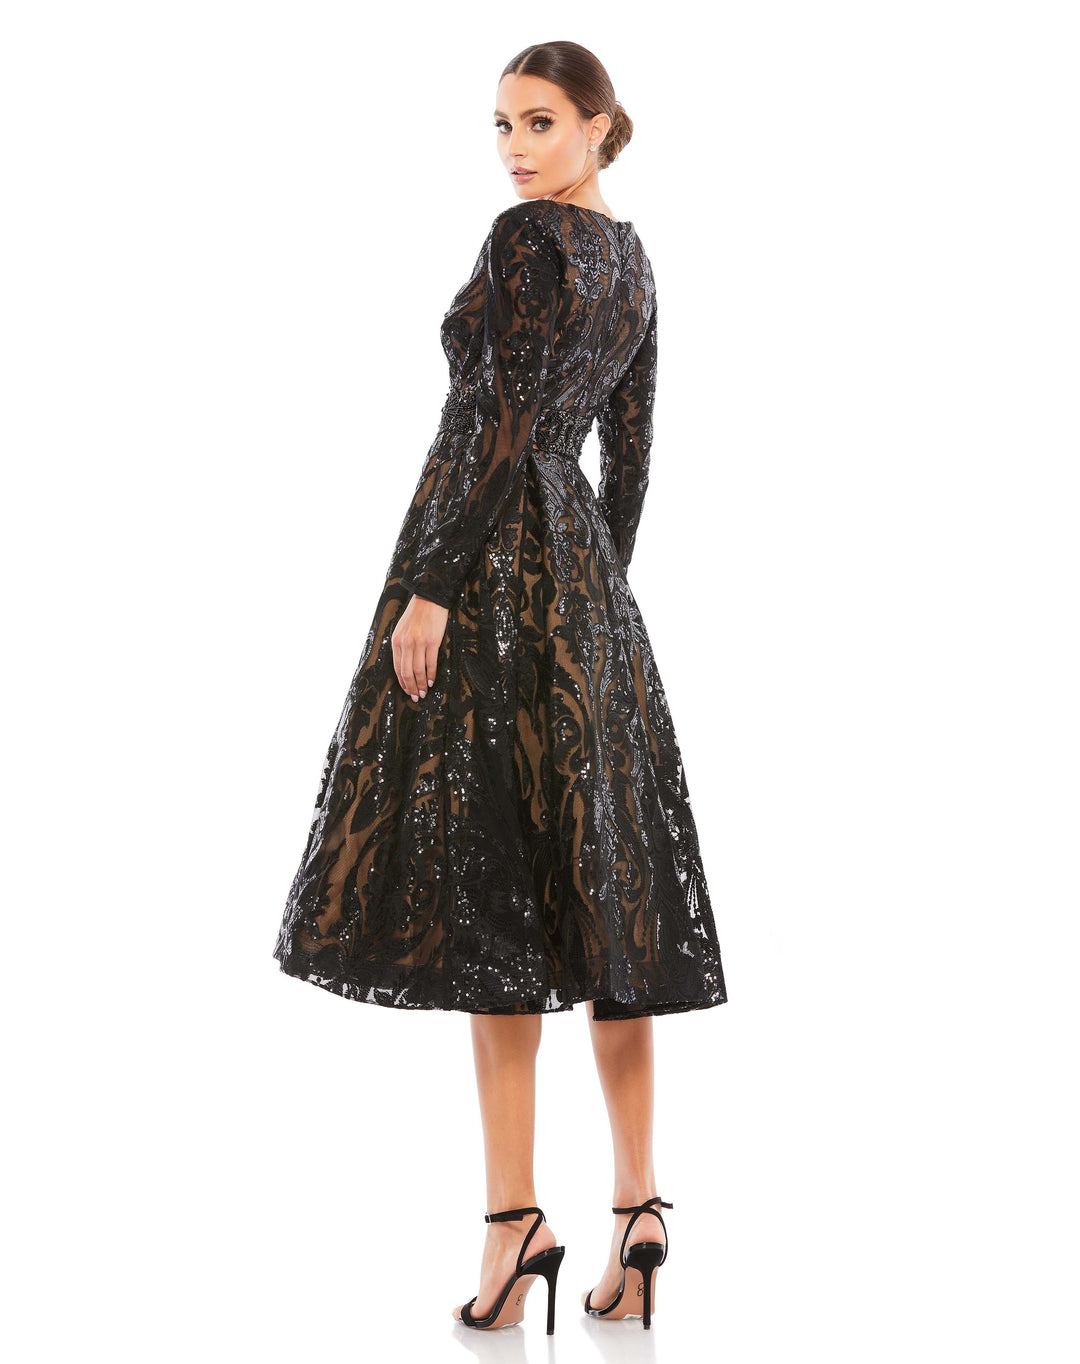 Sequin Embellished A-Line Cocktail Dress – Mac Duggal